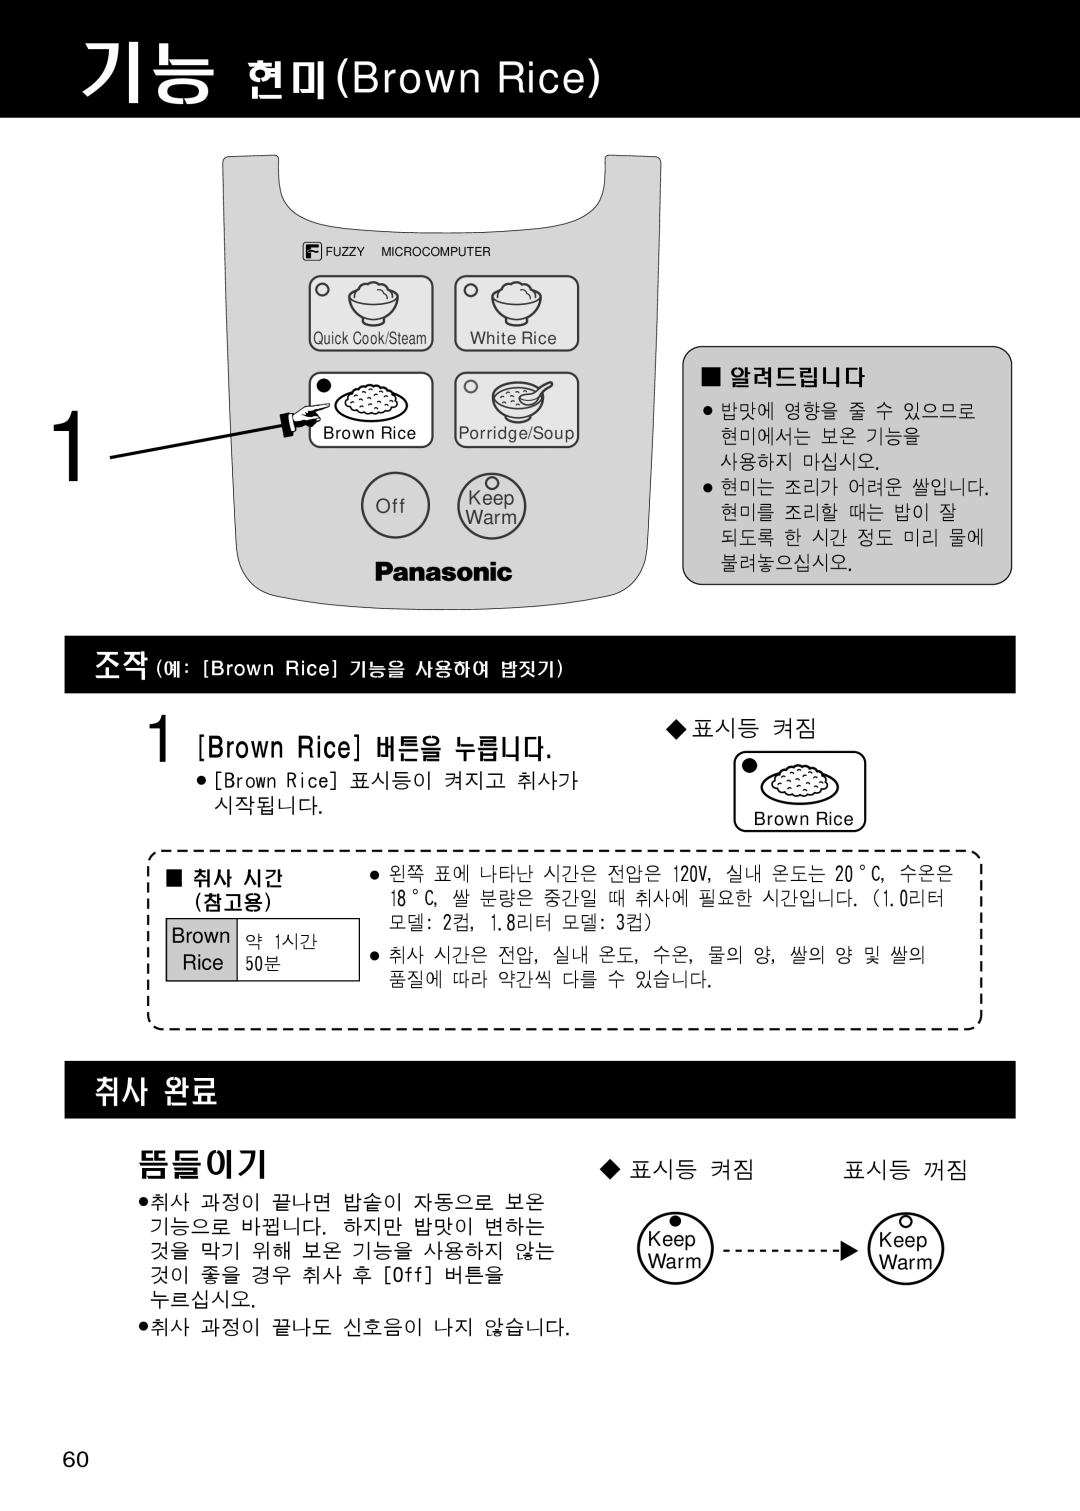 Panasonic SR/DF181 specifications 기능 현미Brown Rice, Brown Rice 버튼을 누릅니다, 취사 완료, 뜸들이기, 알려드립니다, 표시등 켜짐, 표시등 꺼짐, Off Keep Warm 